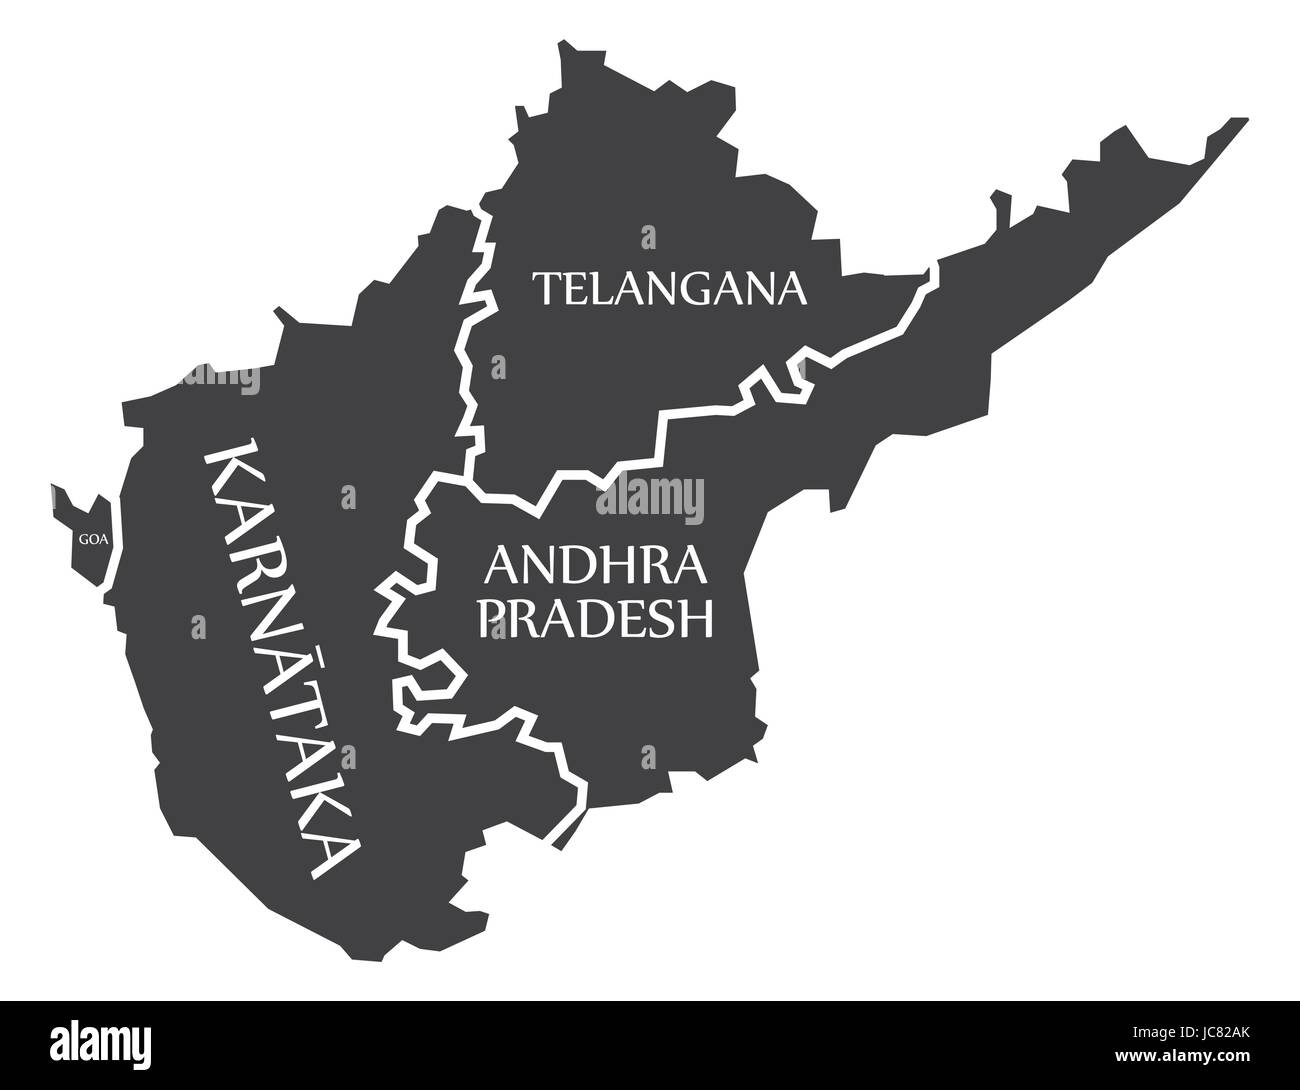 Goa - Karnataka - Telangana - Andhra Pradesh Map Illustration d'états indiens Illustration de Vecteur